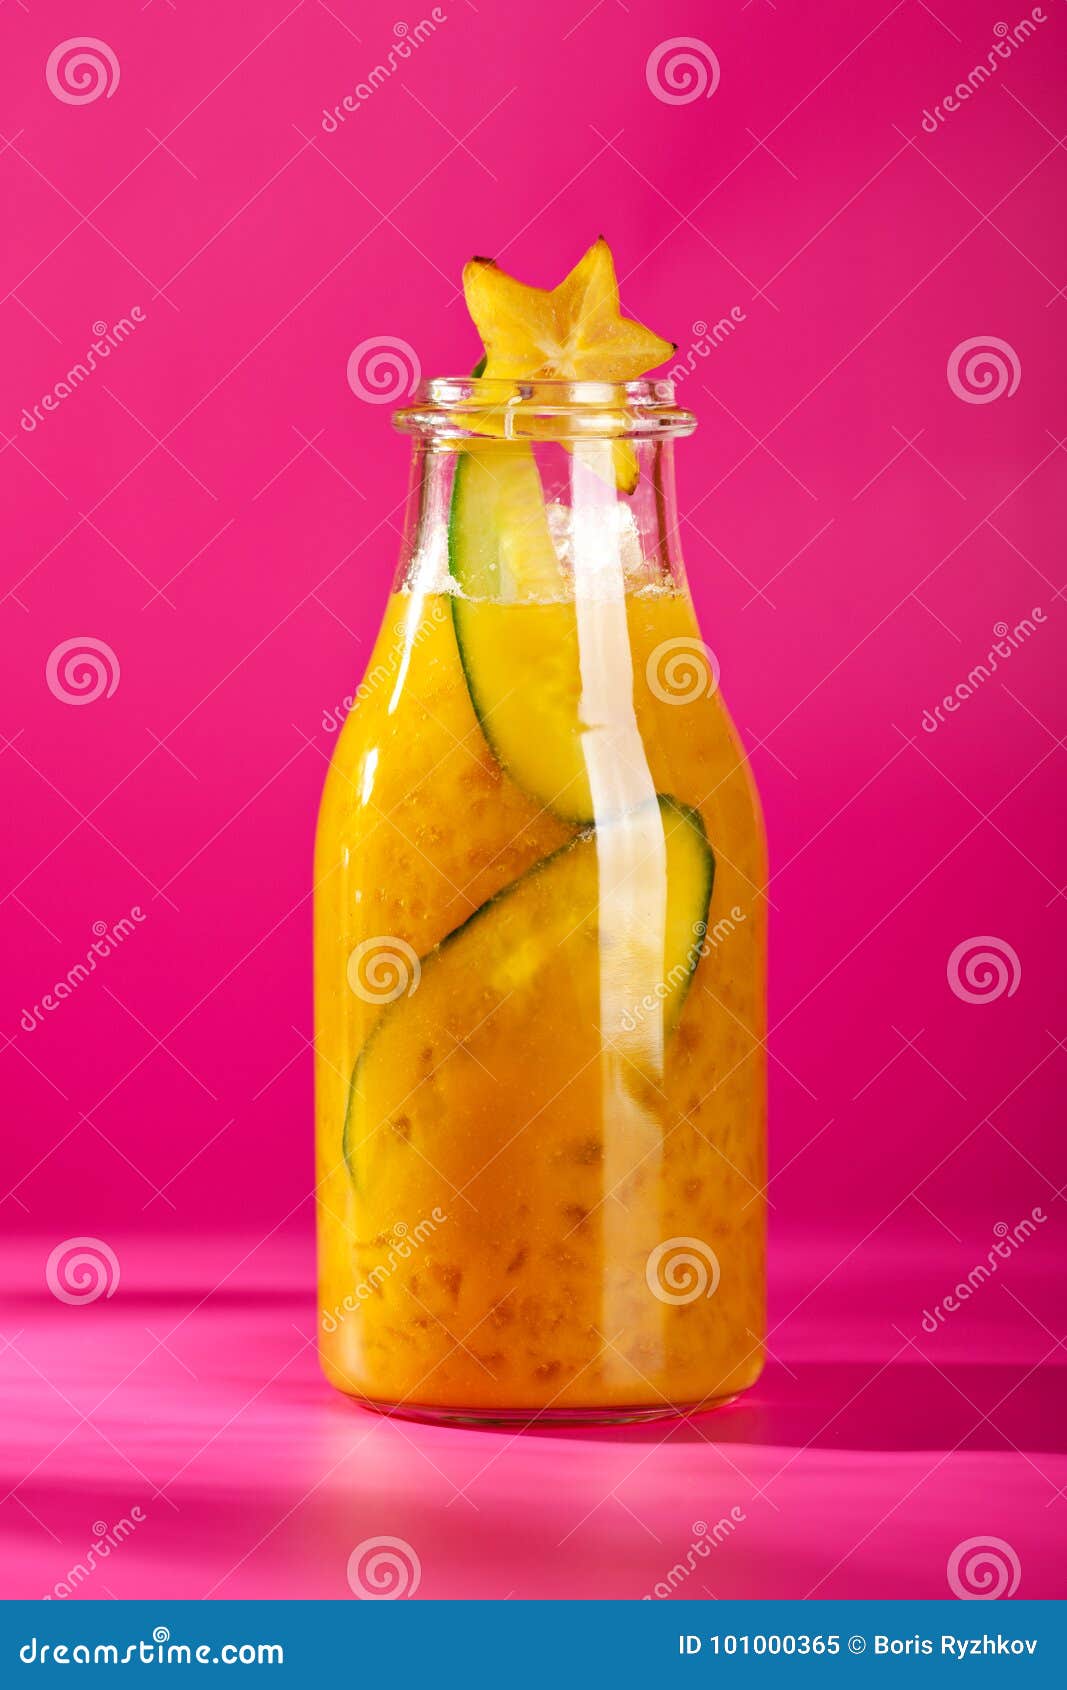 Summer Lemonade Cocktail stock image. Image of homemade - 101000365